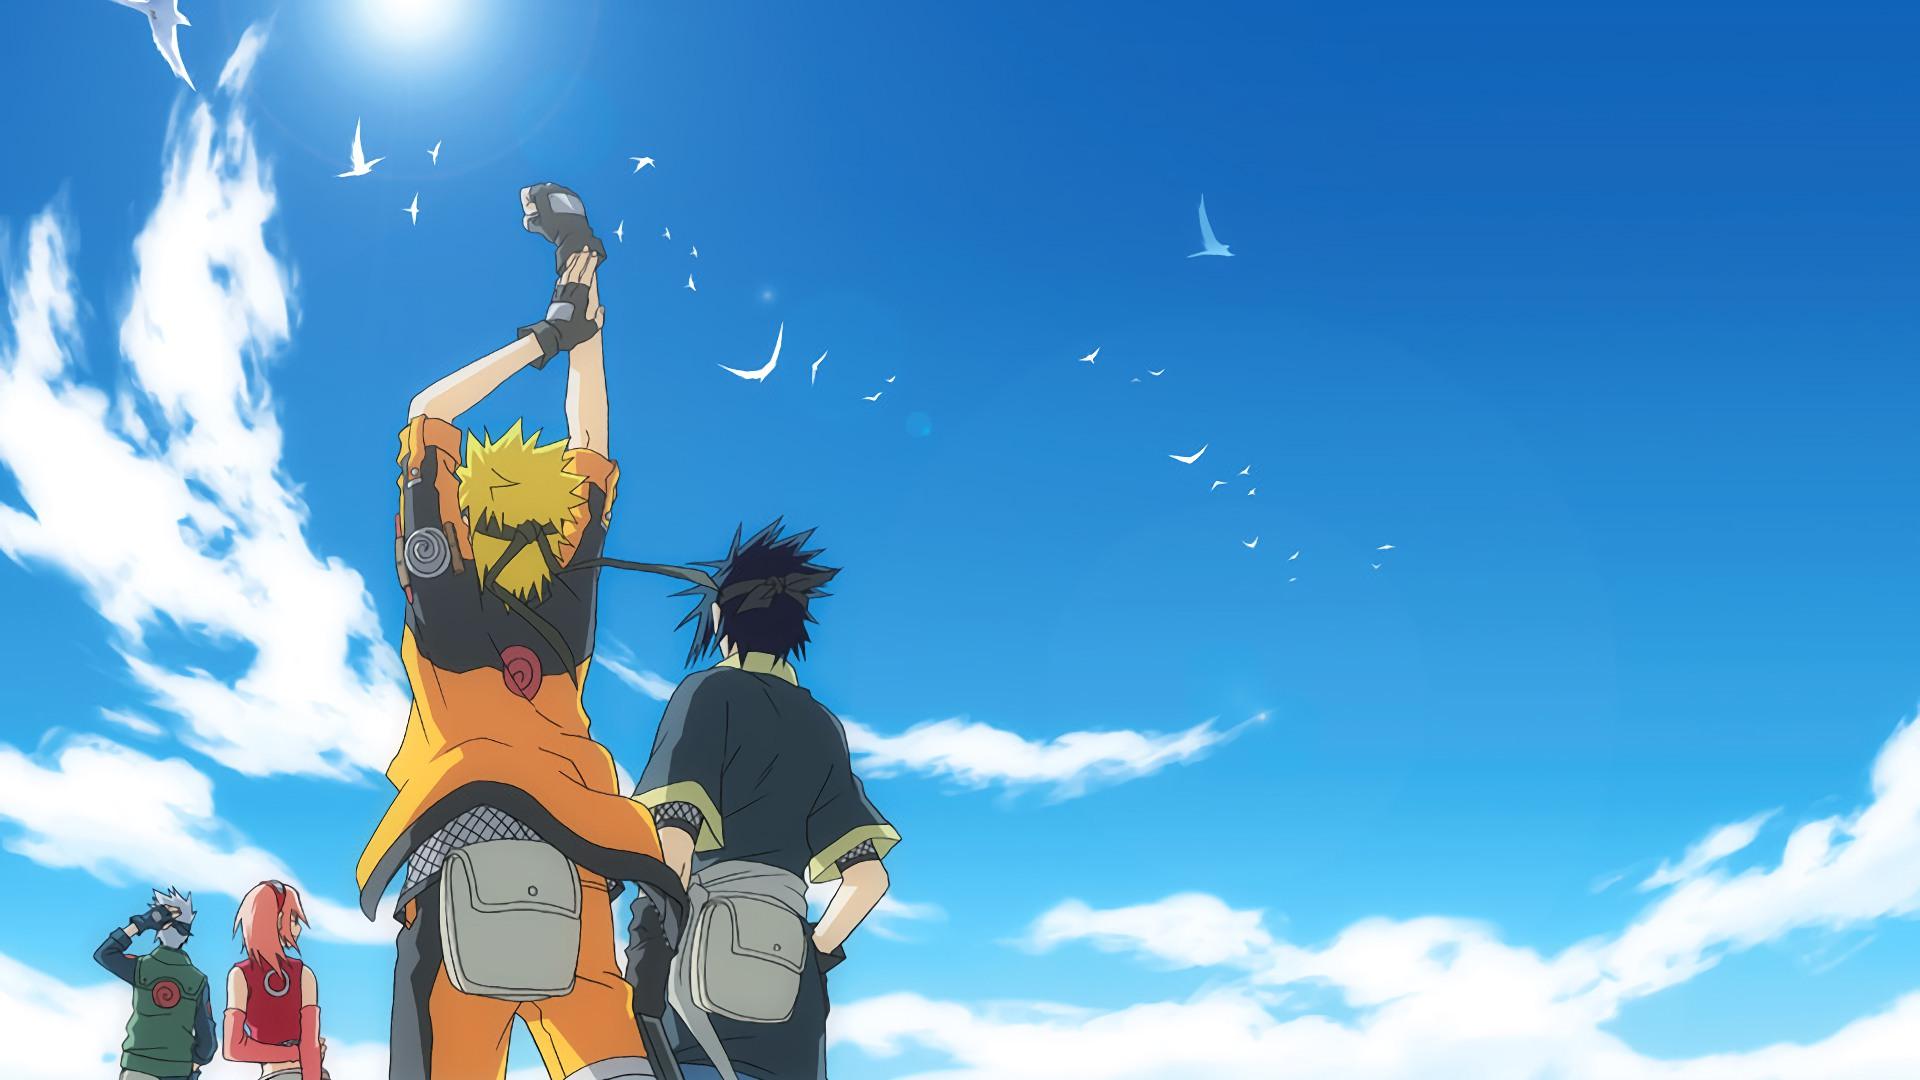 Anime wallpaper with three people standing on a hill - Computer, Naruto, Sasuke Uchiha